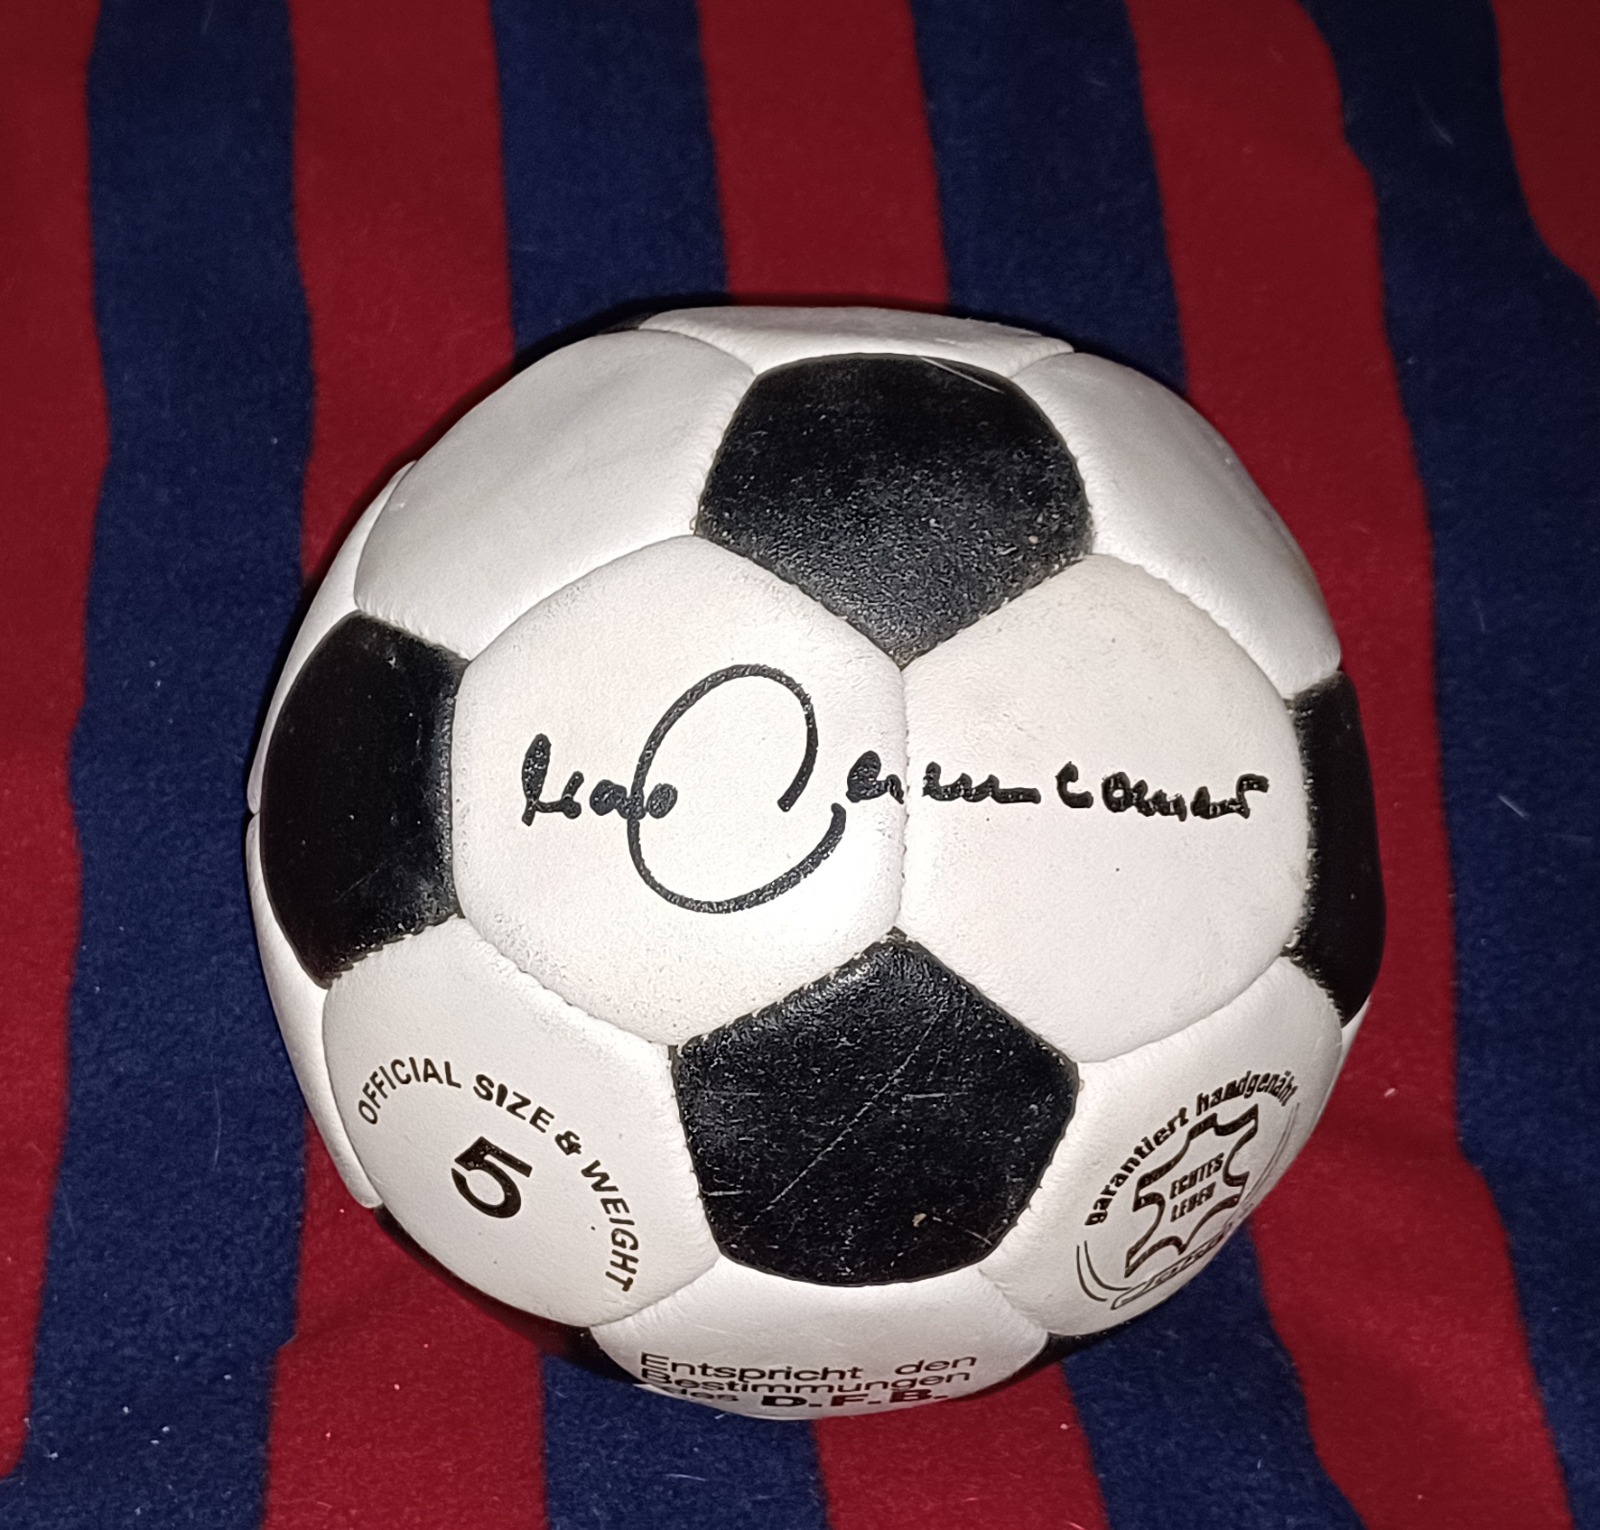 Pallone autografato da Beckenbauer